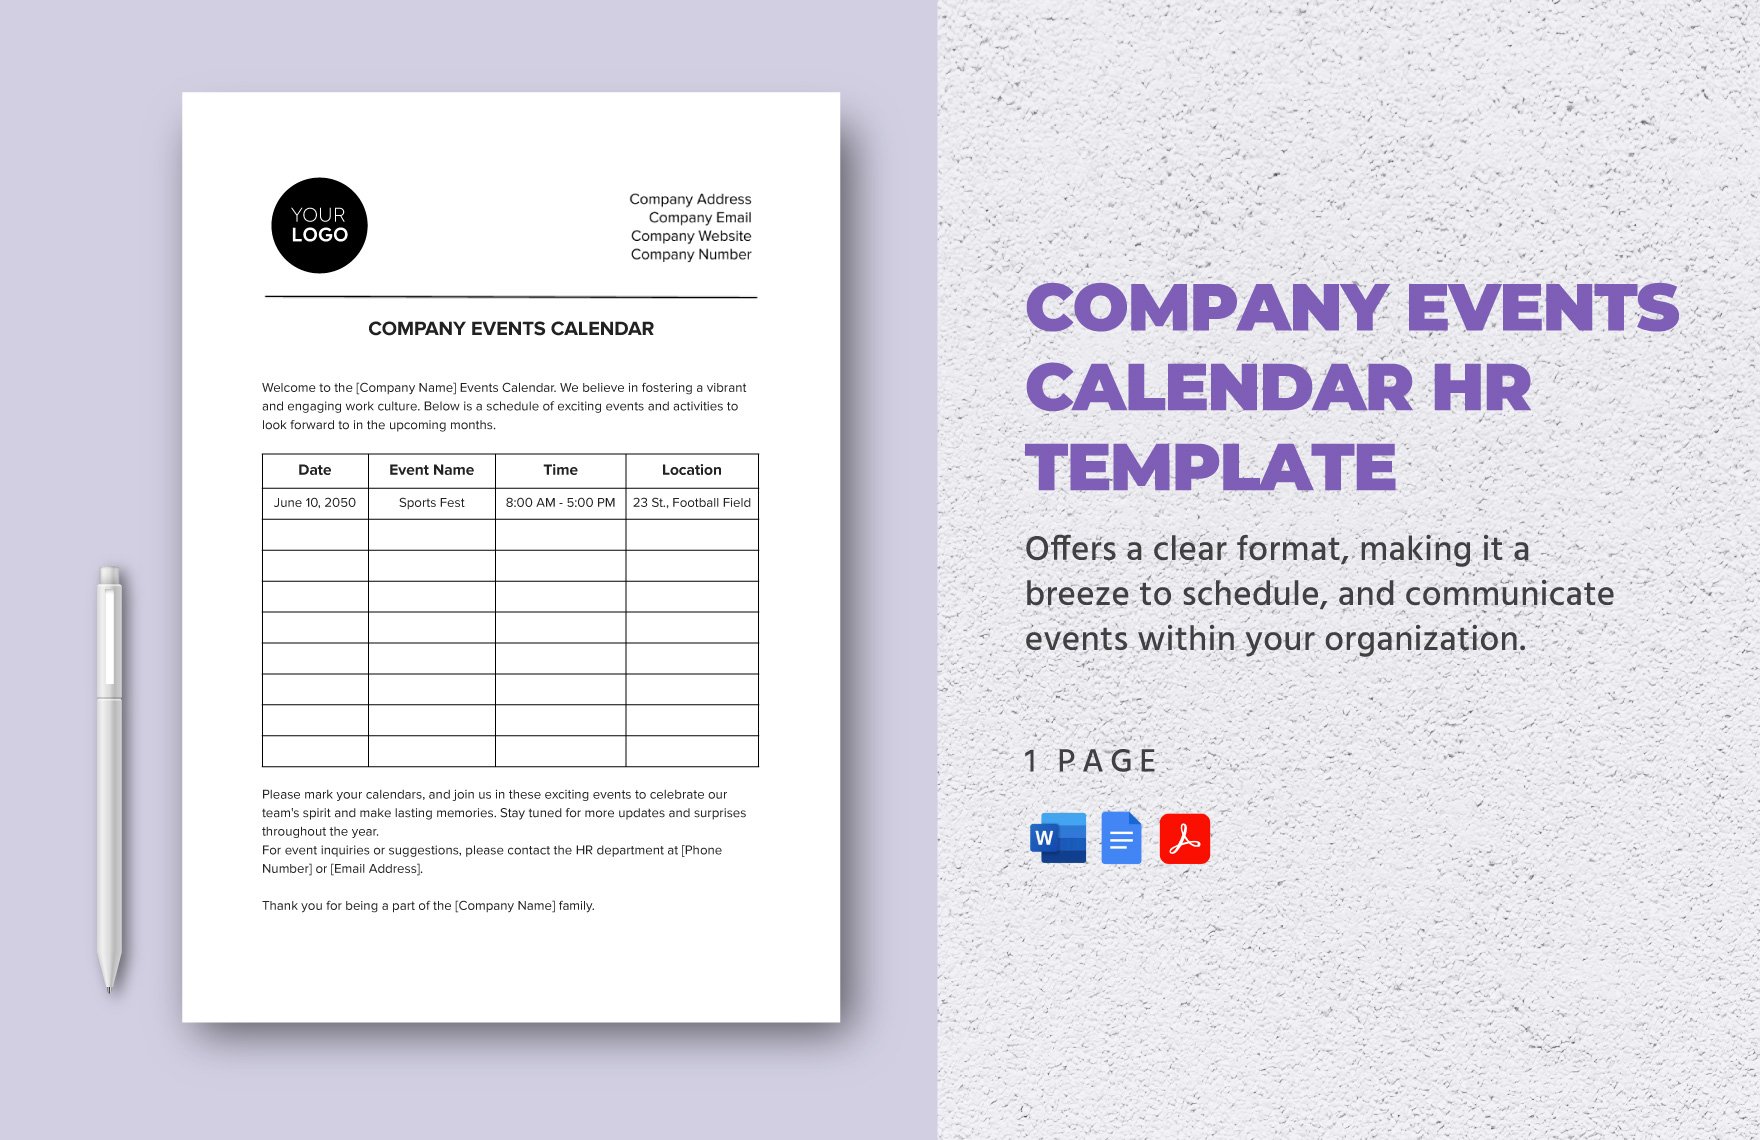 Company Events Calendar HR Template in Word, Google Docs, PDF